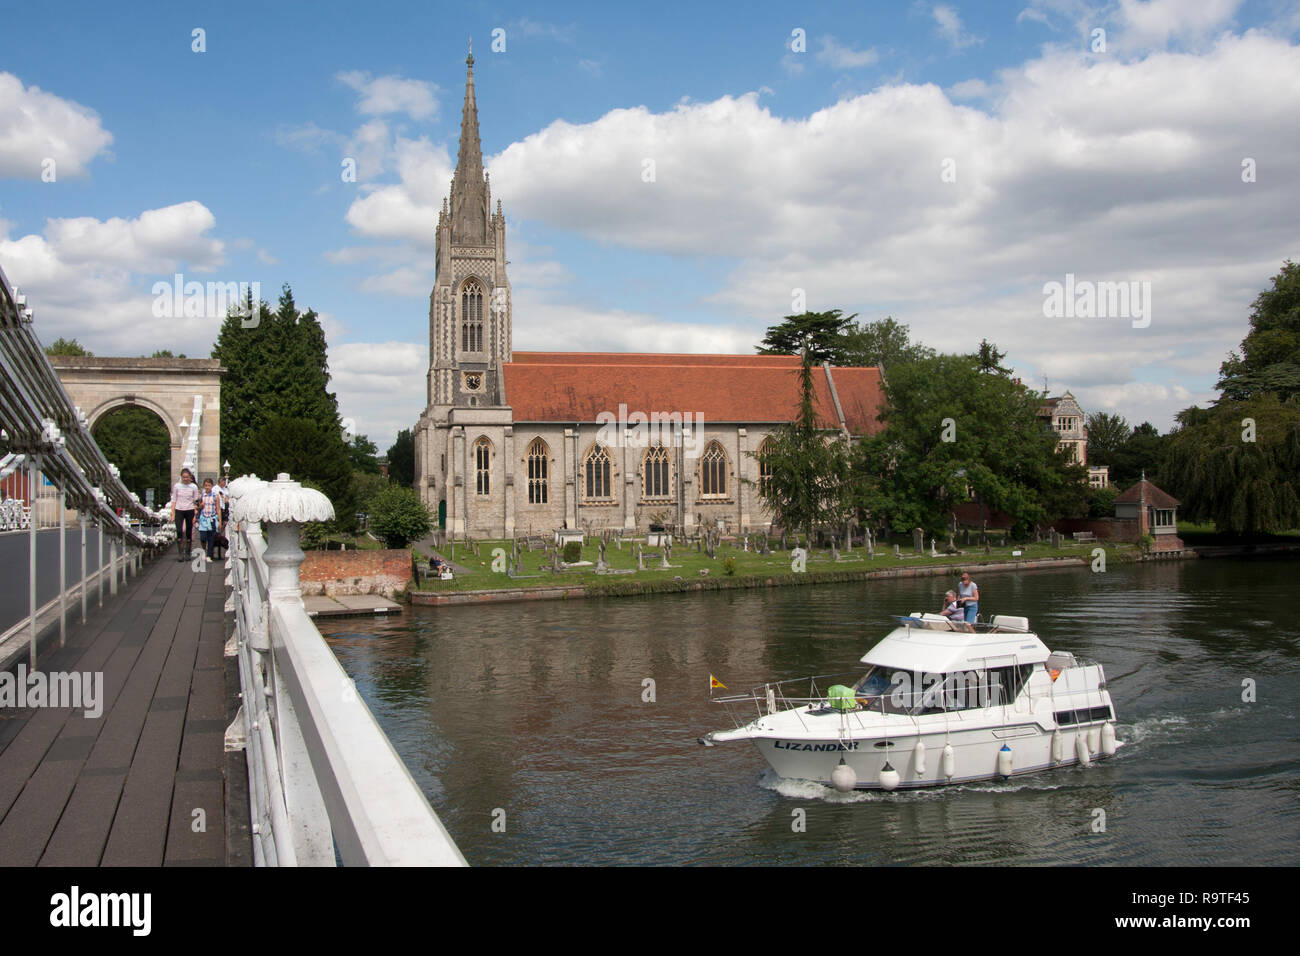 All Saints Church on the River Thames Marlow, Buckinghamshire, England Stock Photo